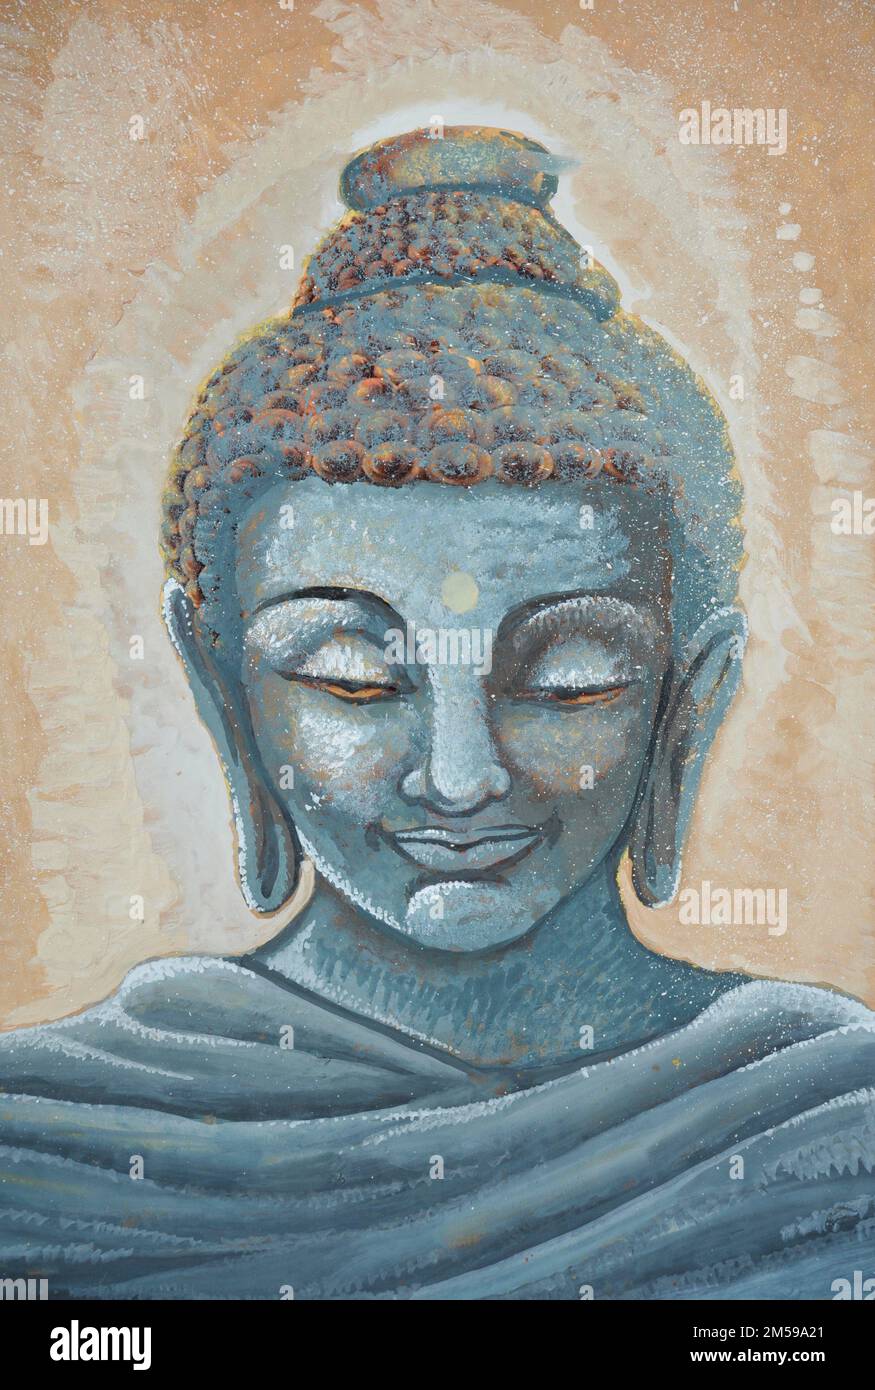 Lord Buddha face artwork painting Stock Photo